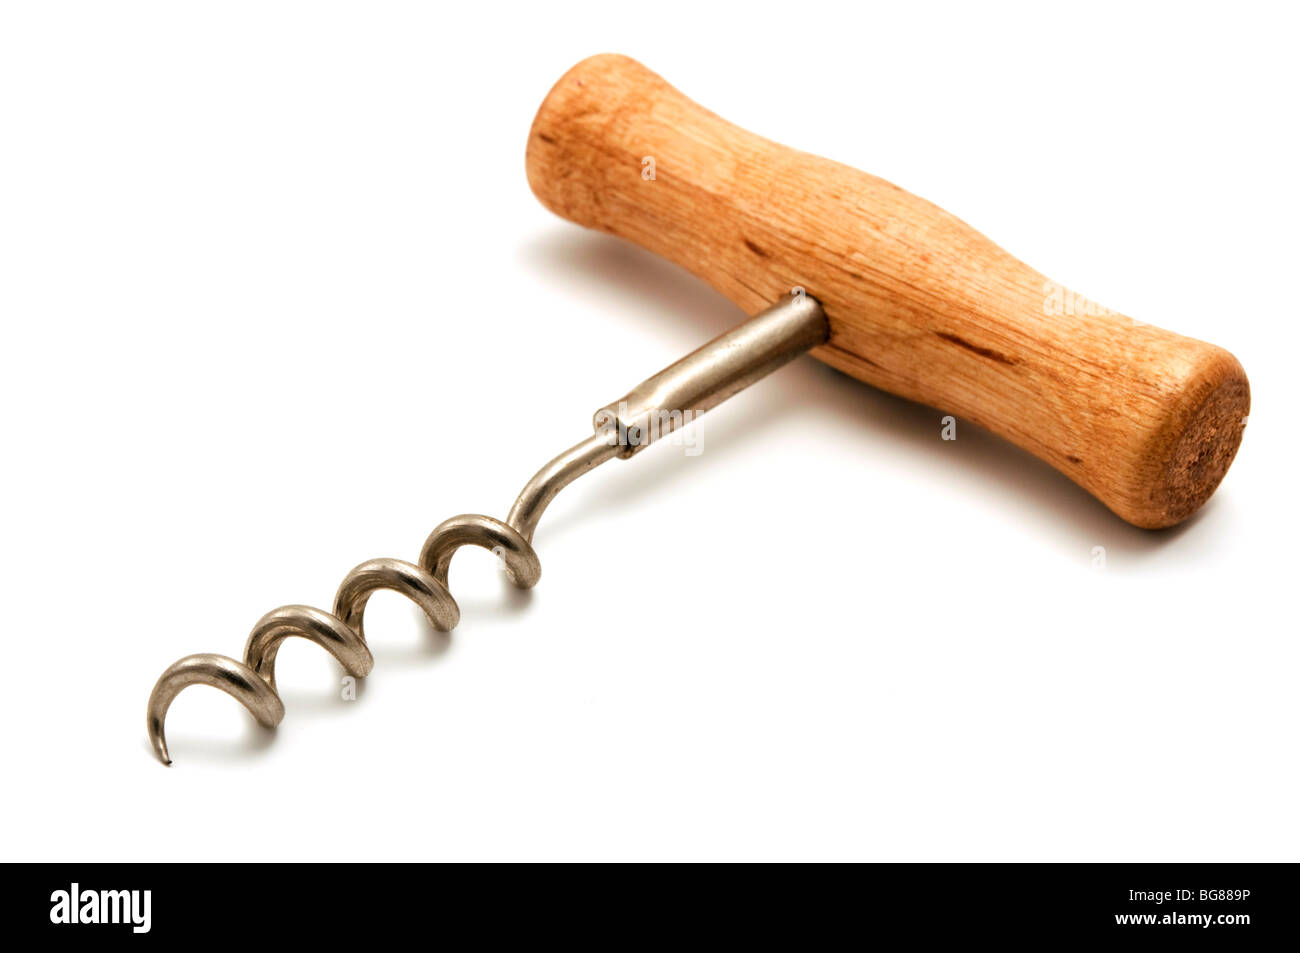 Basic wooden corkscrew on a white background Stock Photo